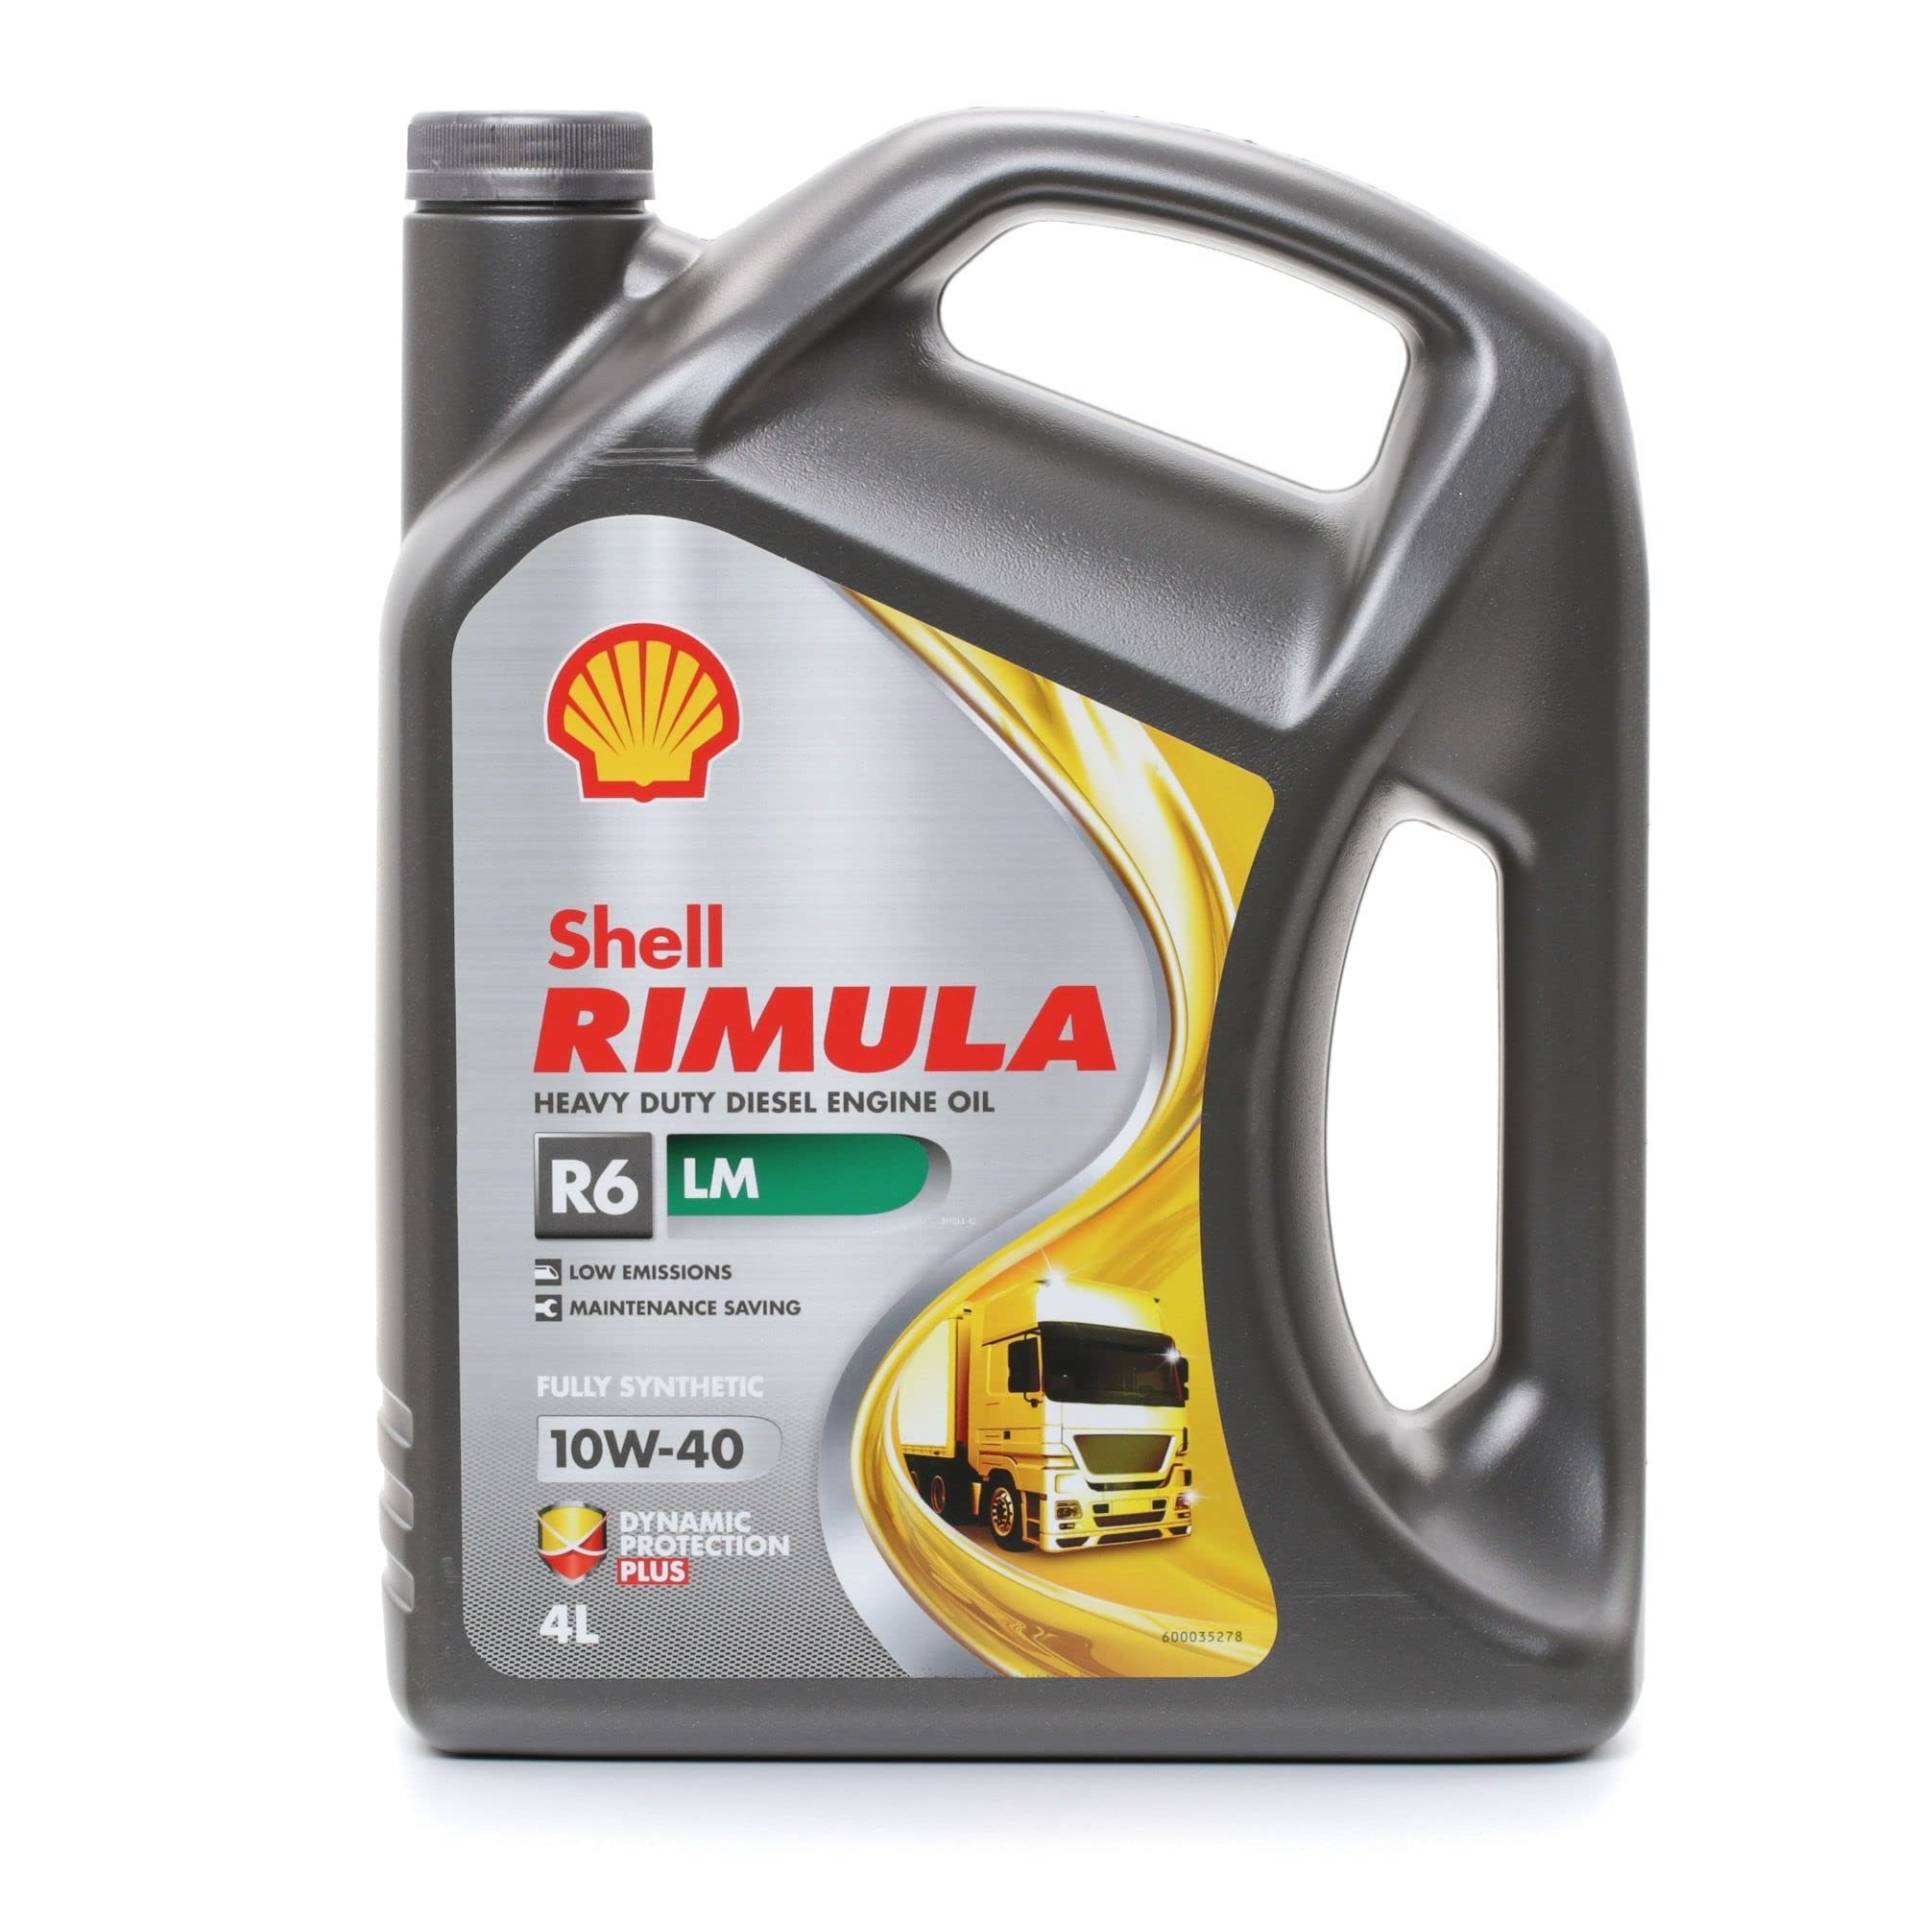 Shell Rimula R6-LM 10W-40 Motoröl, 4 Litre von Shell